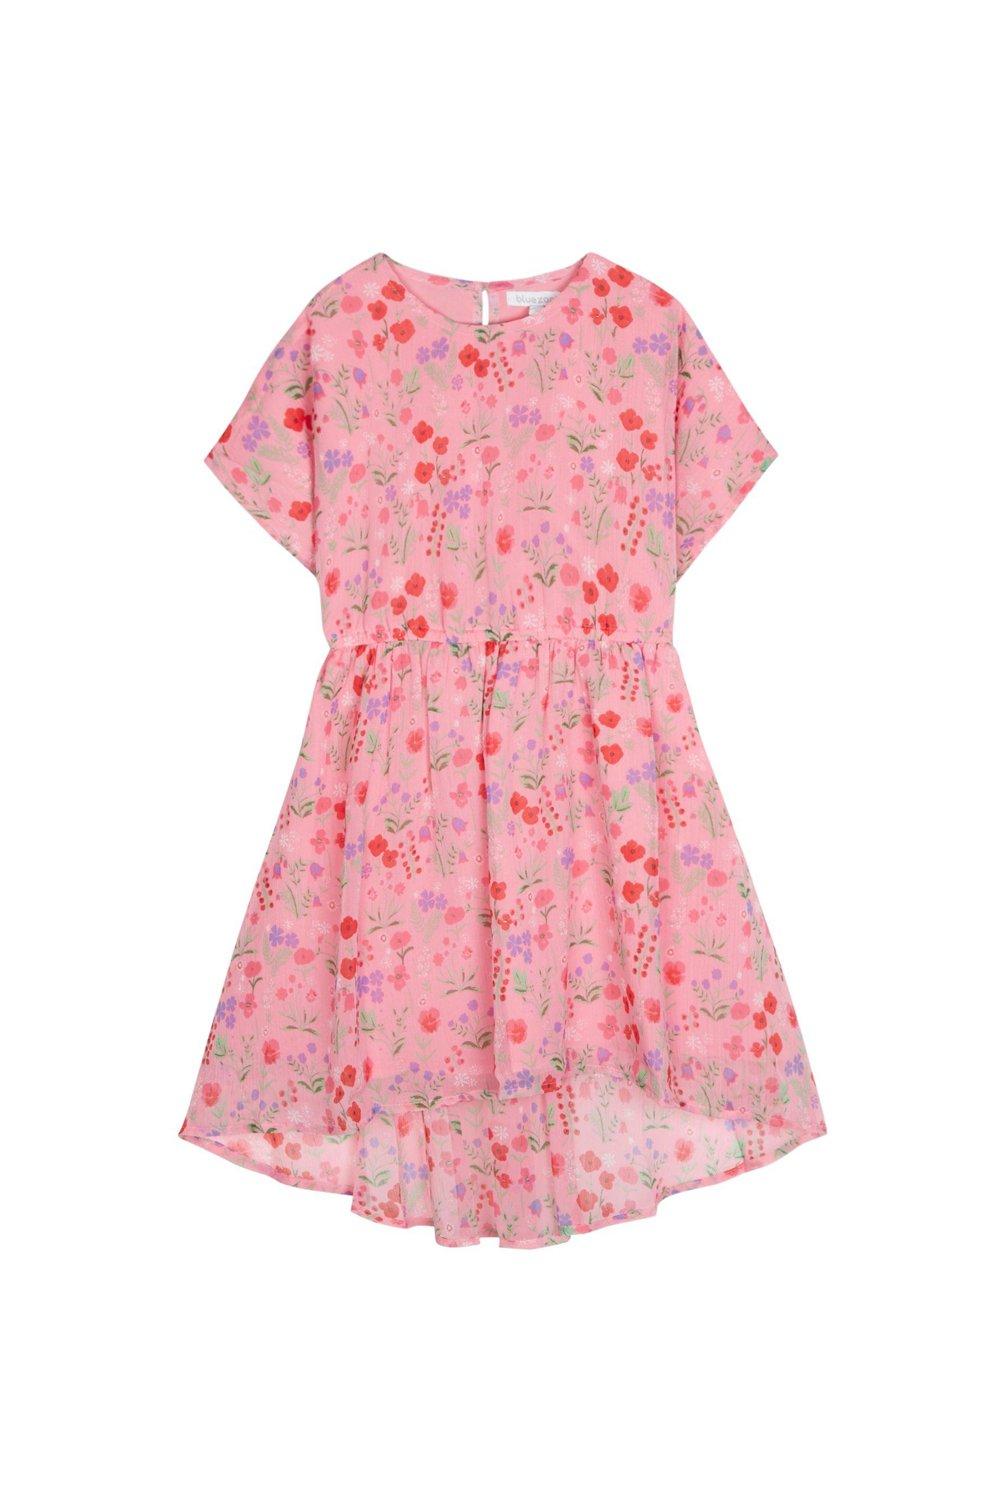 Blue Zoo Girls Pink Floral Print Dress | Debenhams